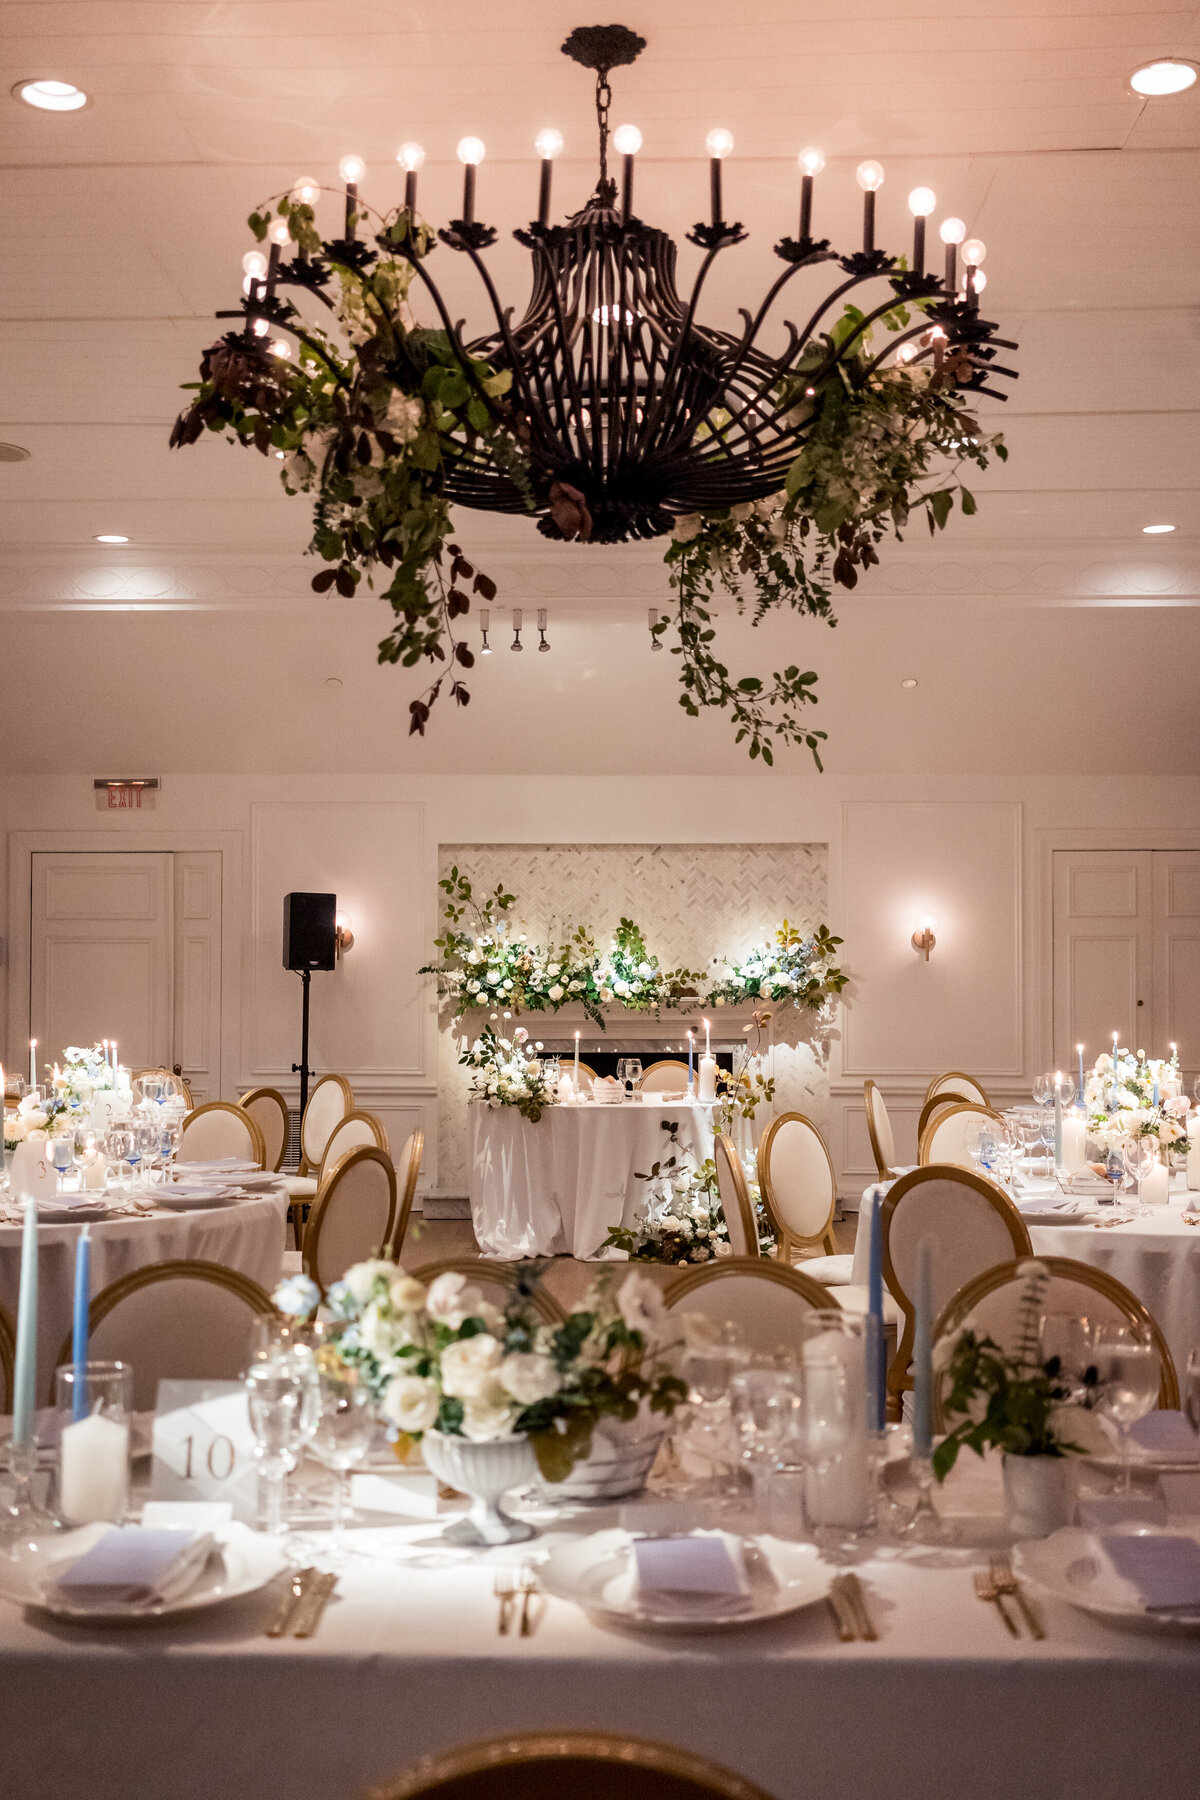 Atelier-Carmel-Wedding-Florist-GALLERY-Spaces-17